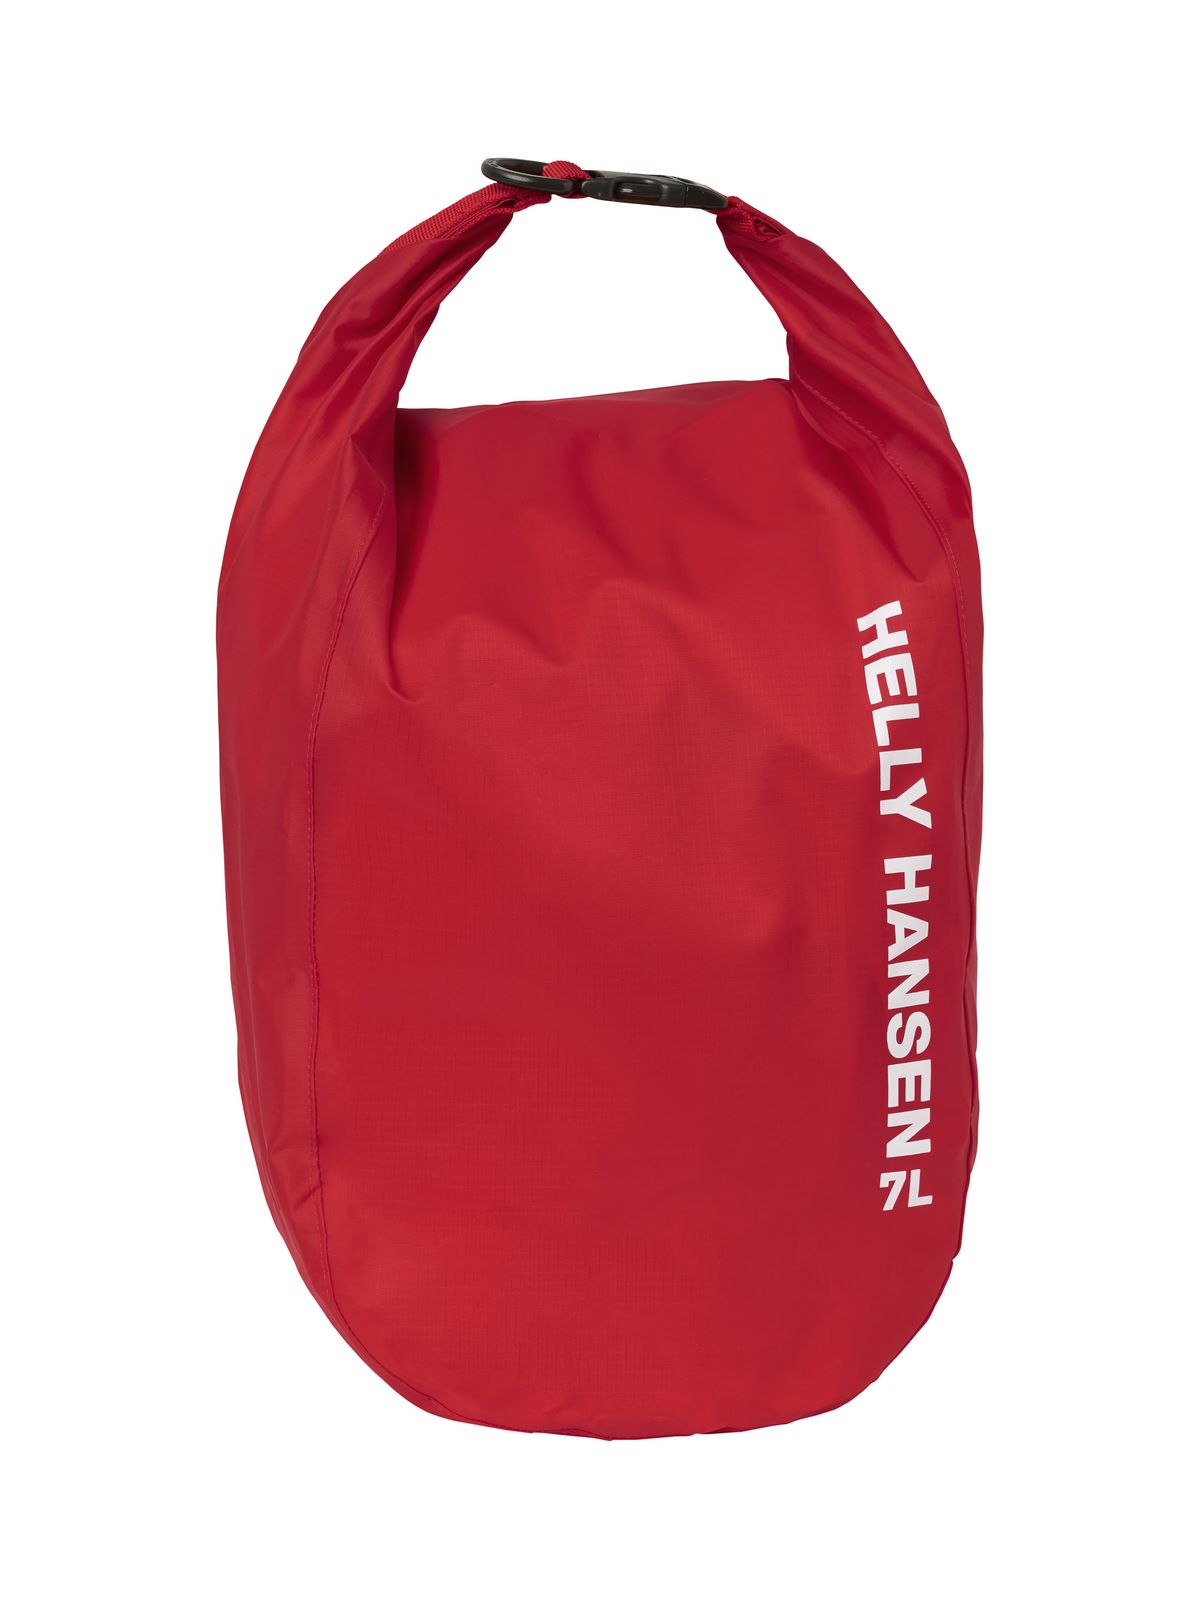 Torba Helly Hansen Hh Light Dry Bag 7L - czerwony